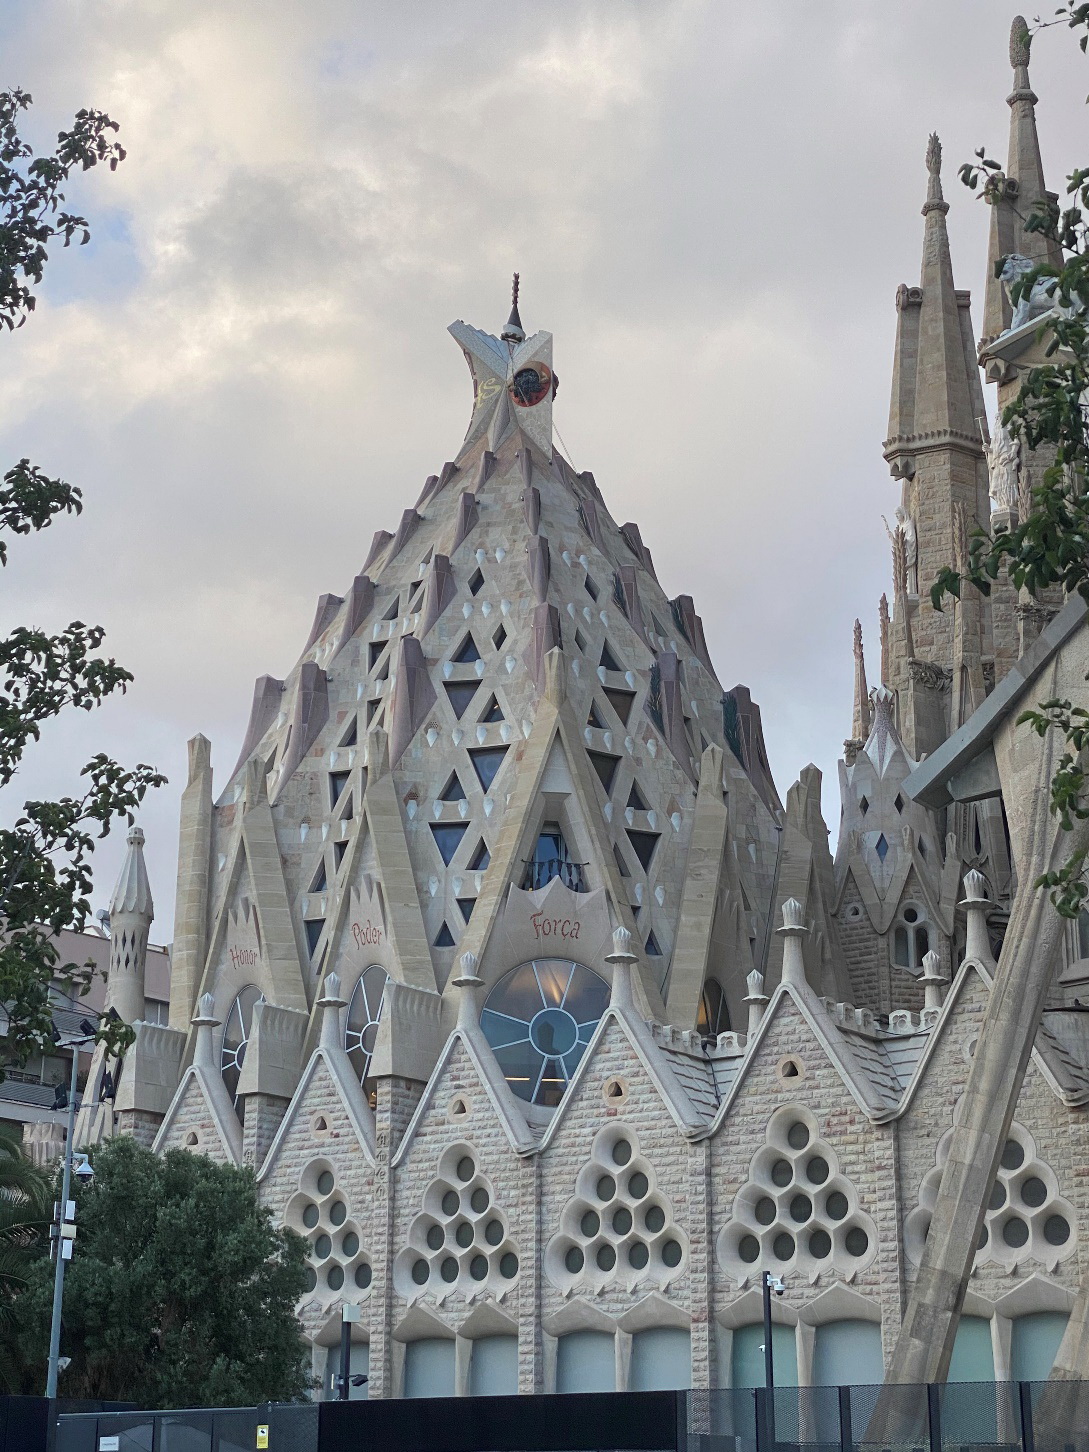 La Sagrada Familia Cathedral by Gaudi Barcelona